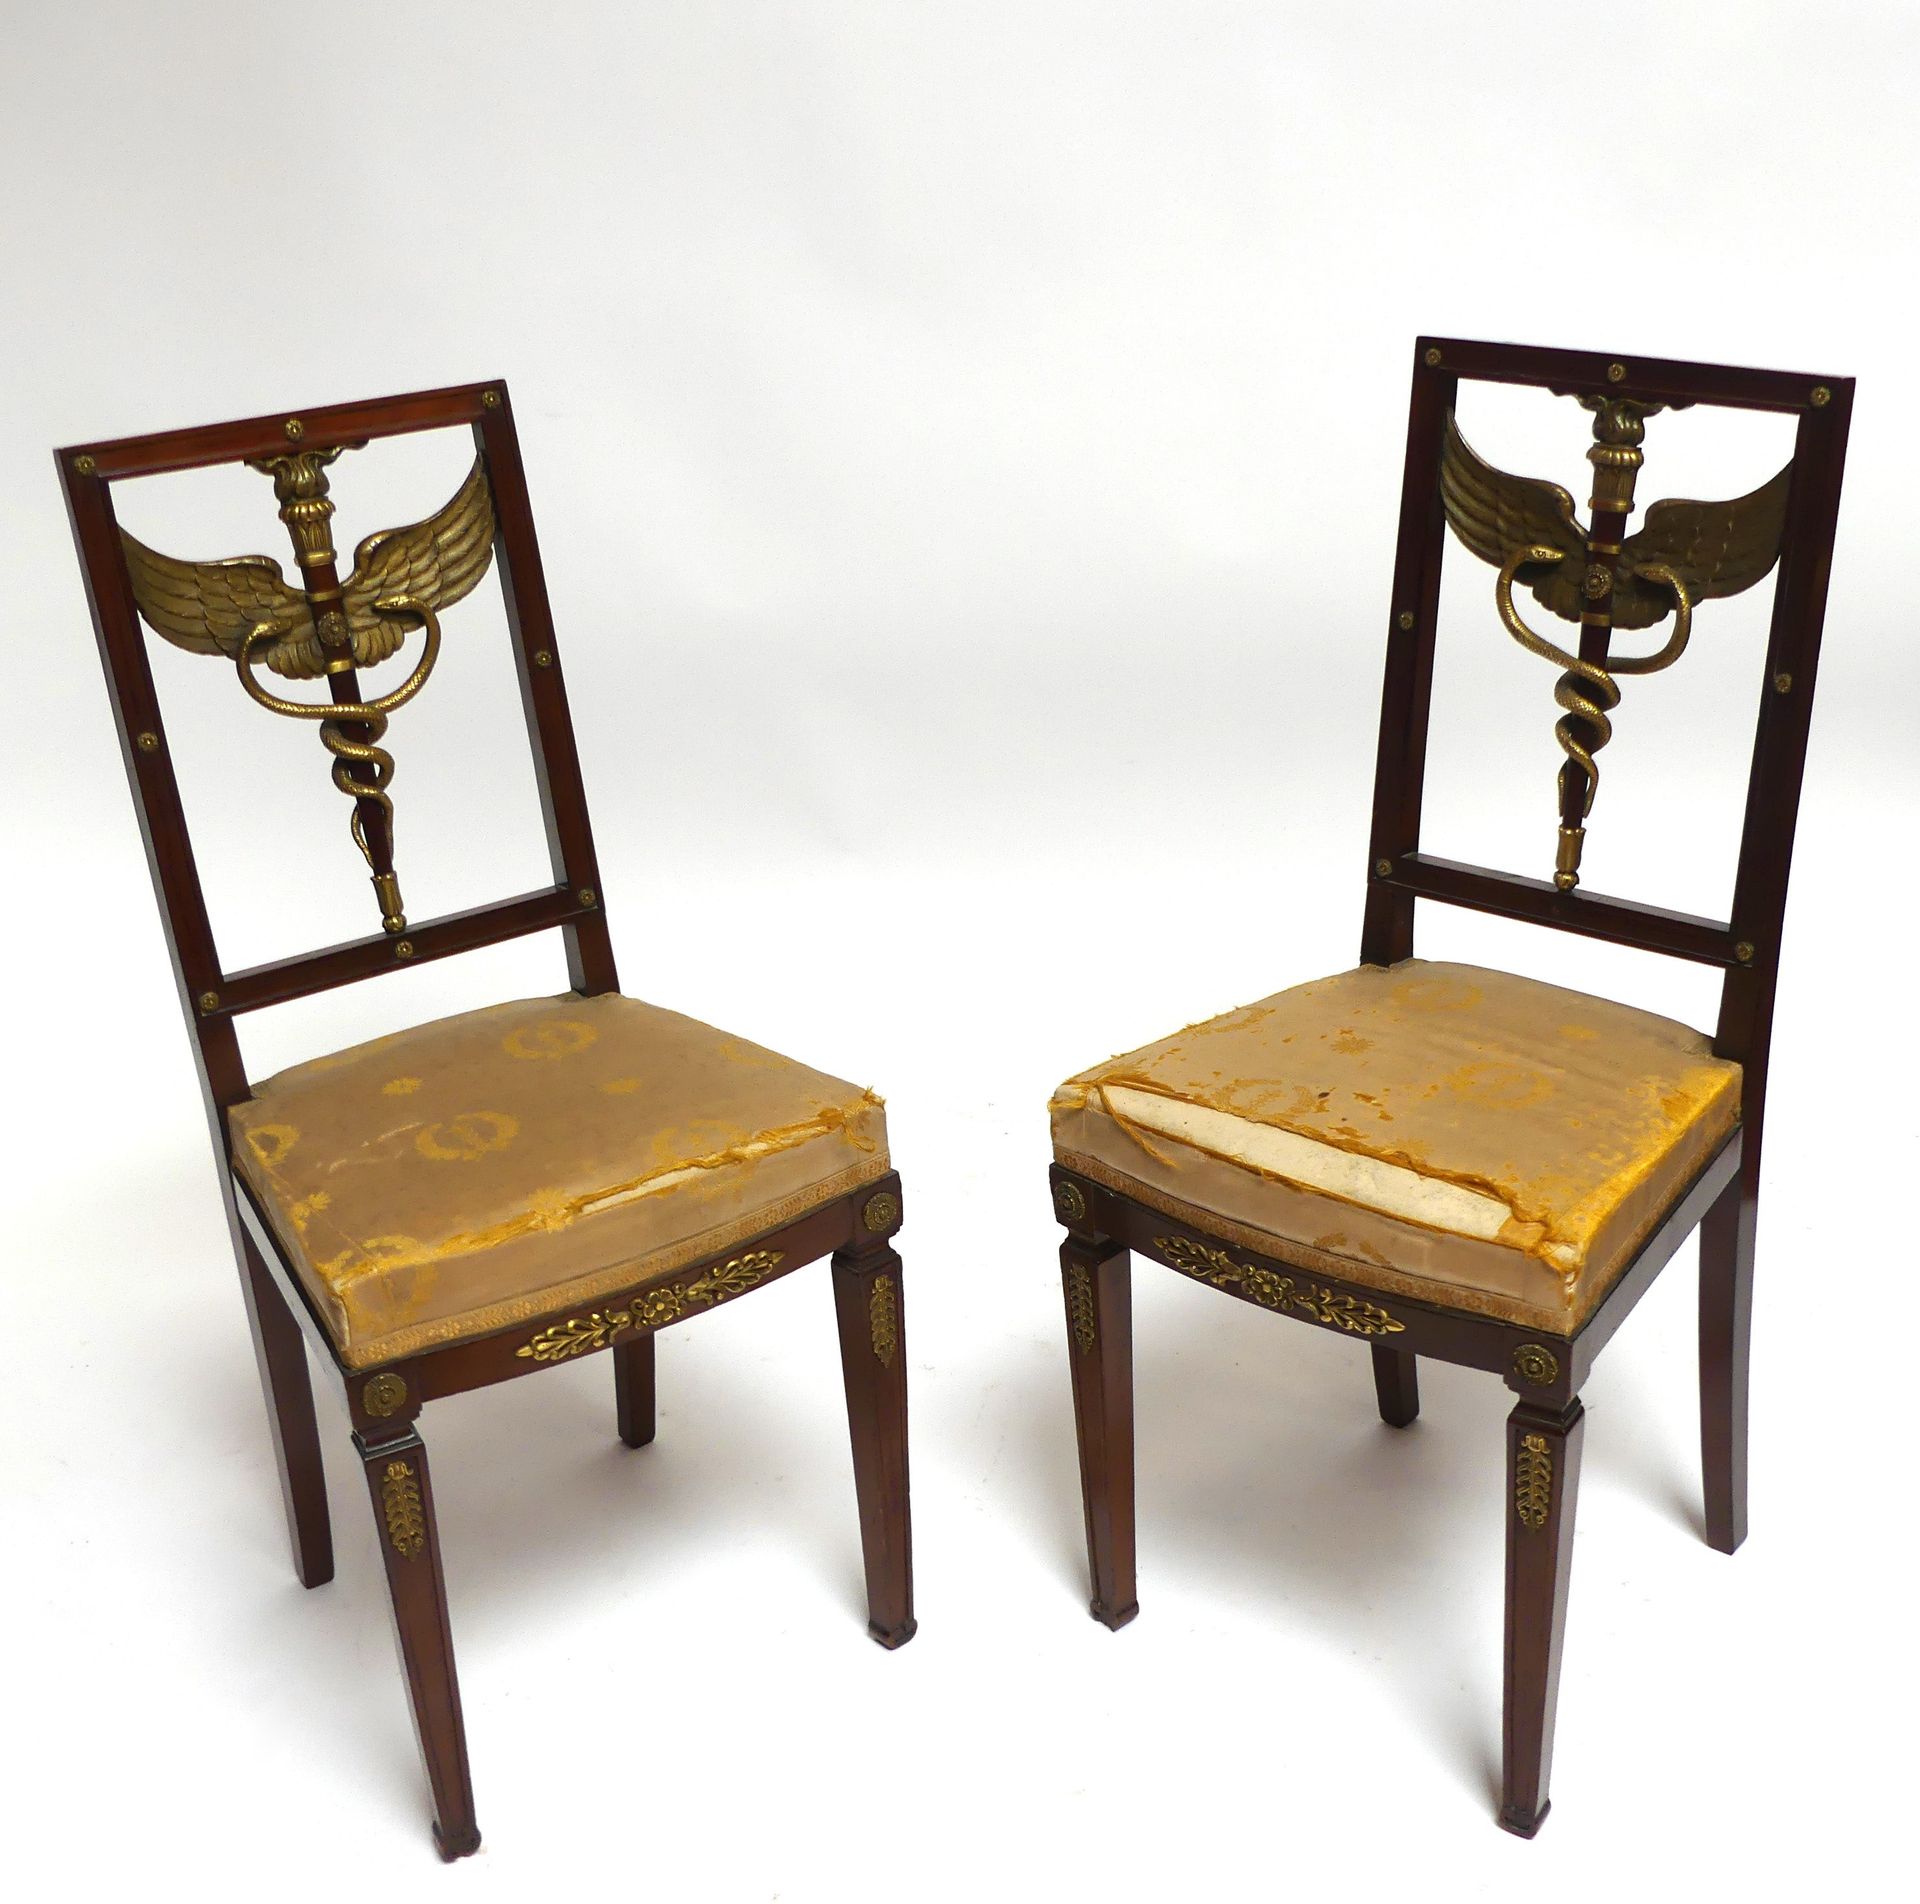 Null 一对桃花心木椅子，靠背上装饰着火炬和两条缠绕在一起的蛇，有镀金的翅膀和镀金的青铜贴纸。帝国风格。